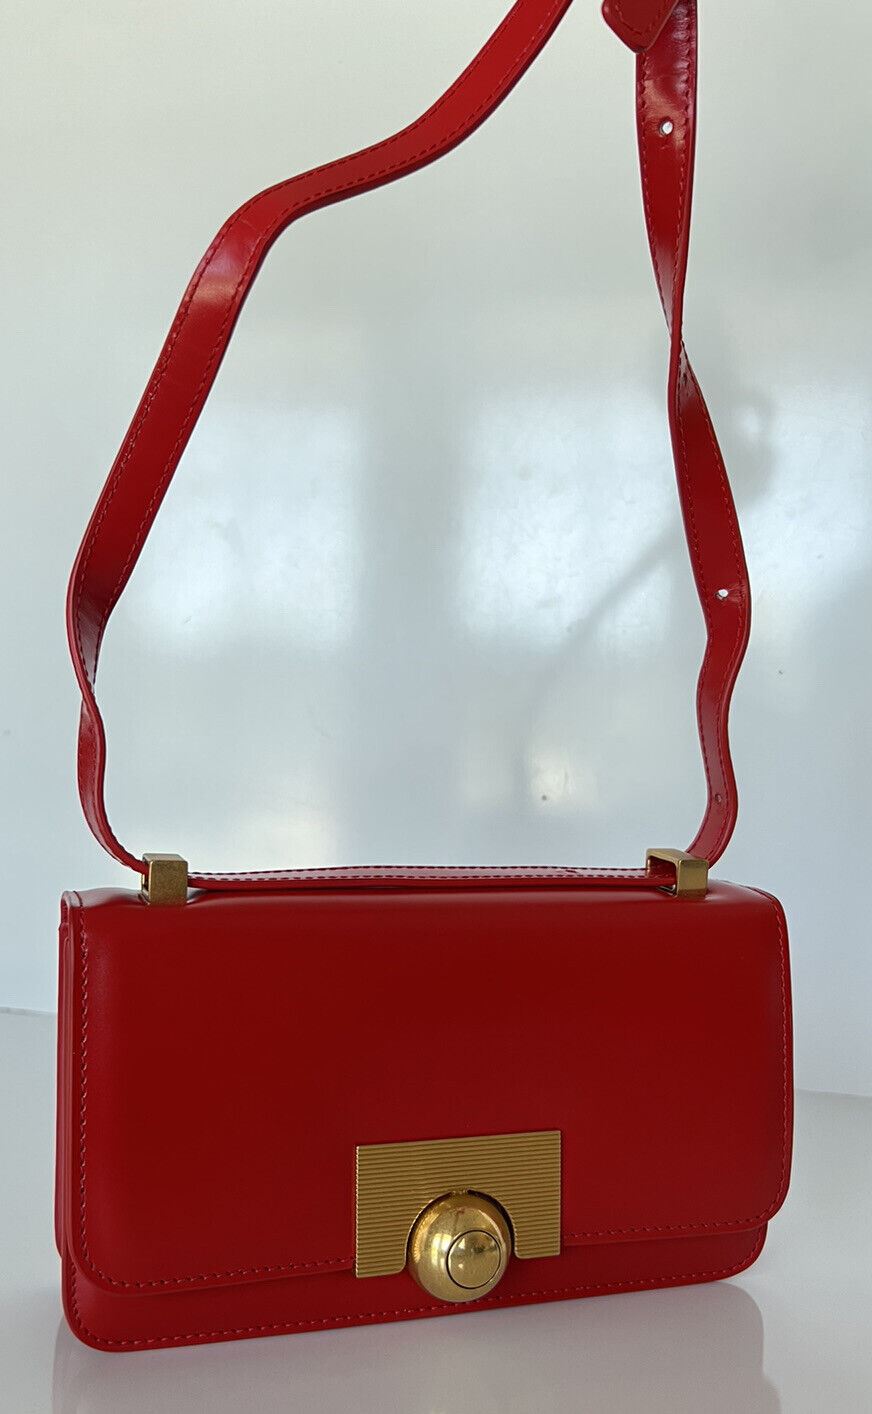 NWT $2000 Bottega Veneta Bright Red Leather Mini Shoulder Bag 587222 Italy